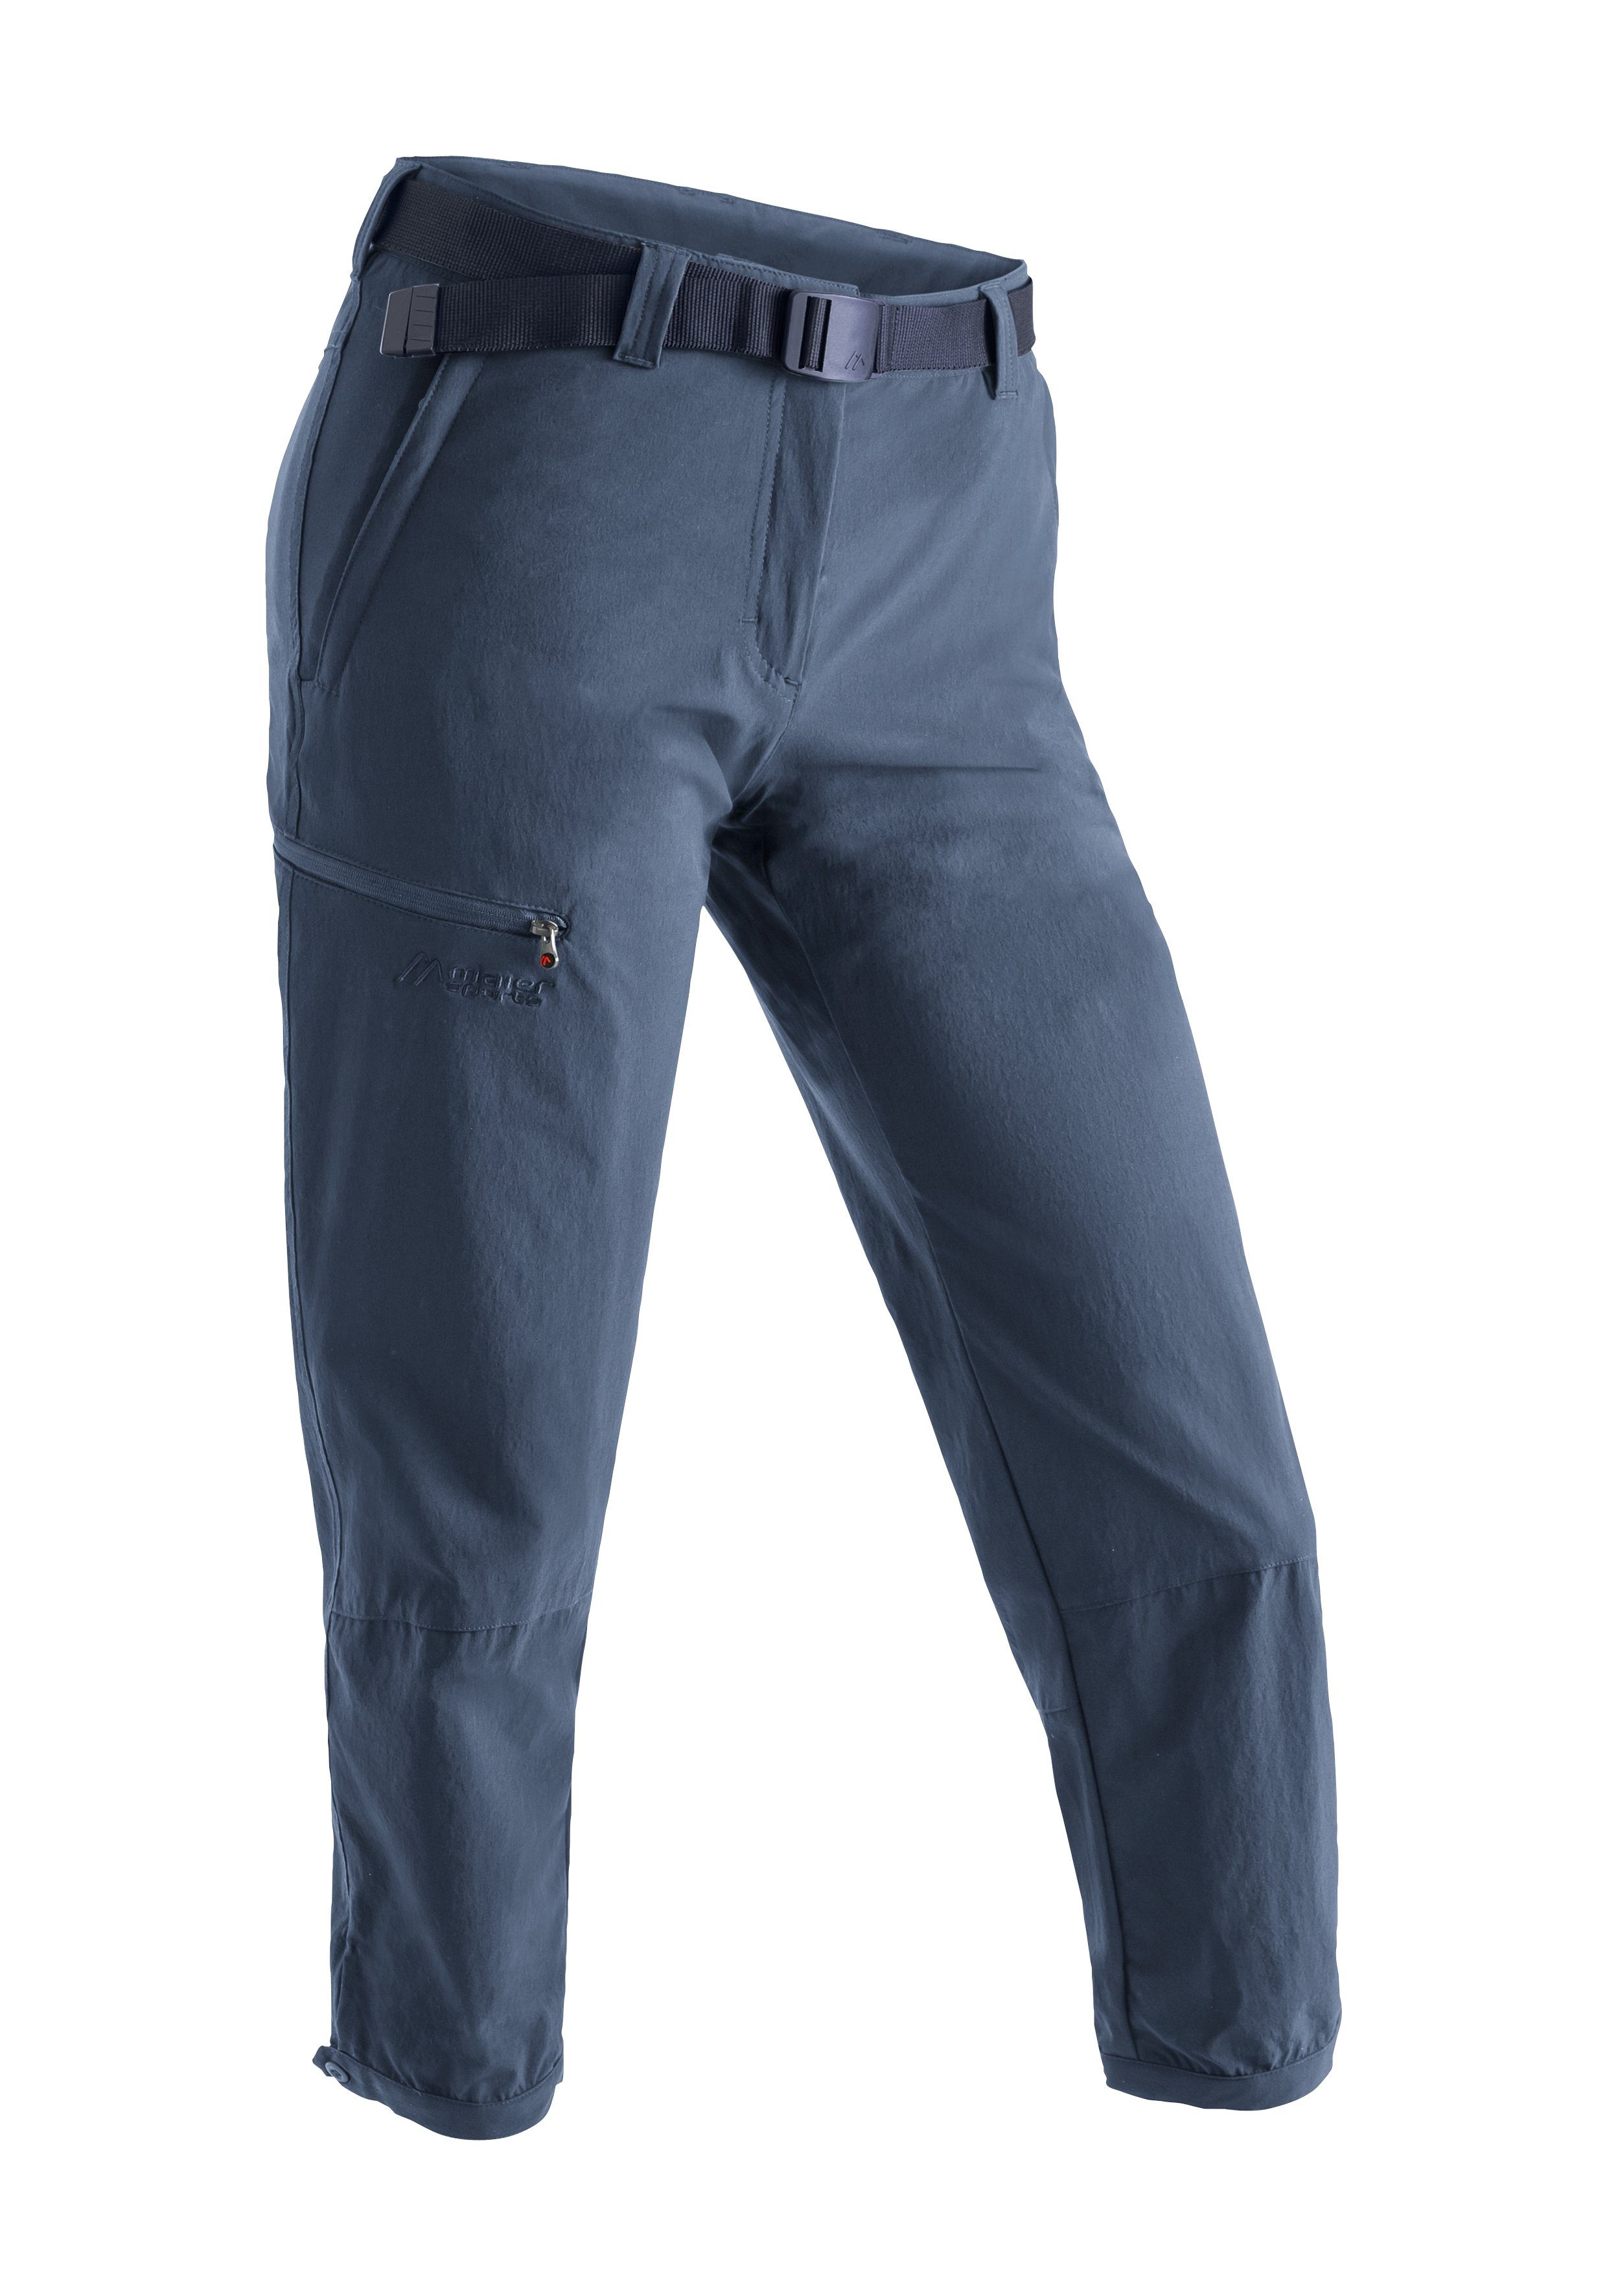 Maier Sports Funktionshose Lulaka jeansblau 7/8 Damen elastische Outdoor-Hose Wanderhose, und atmungsaktive